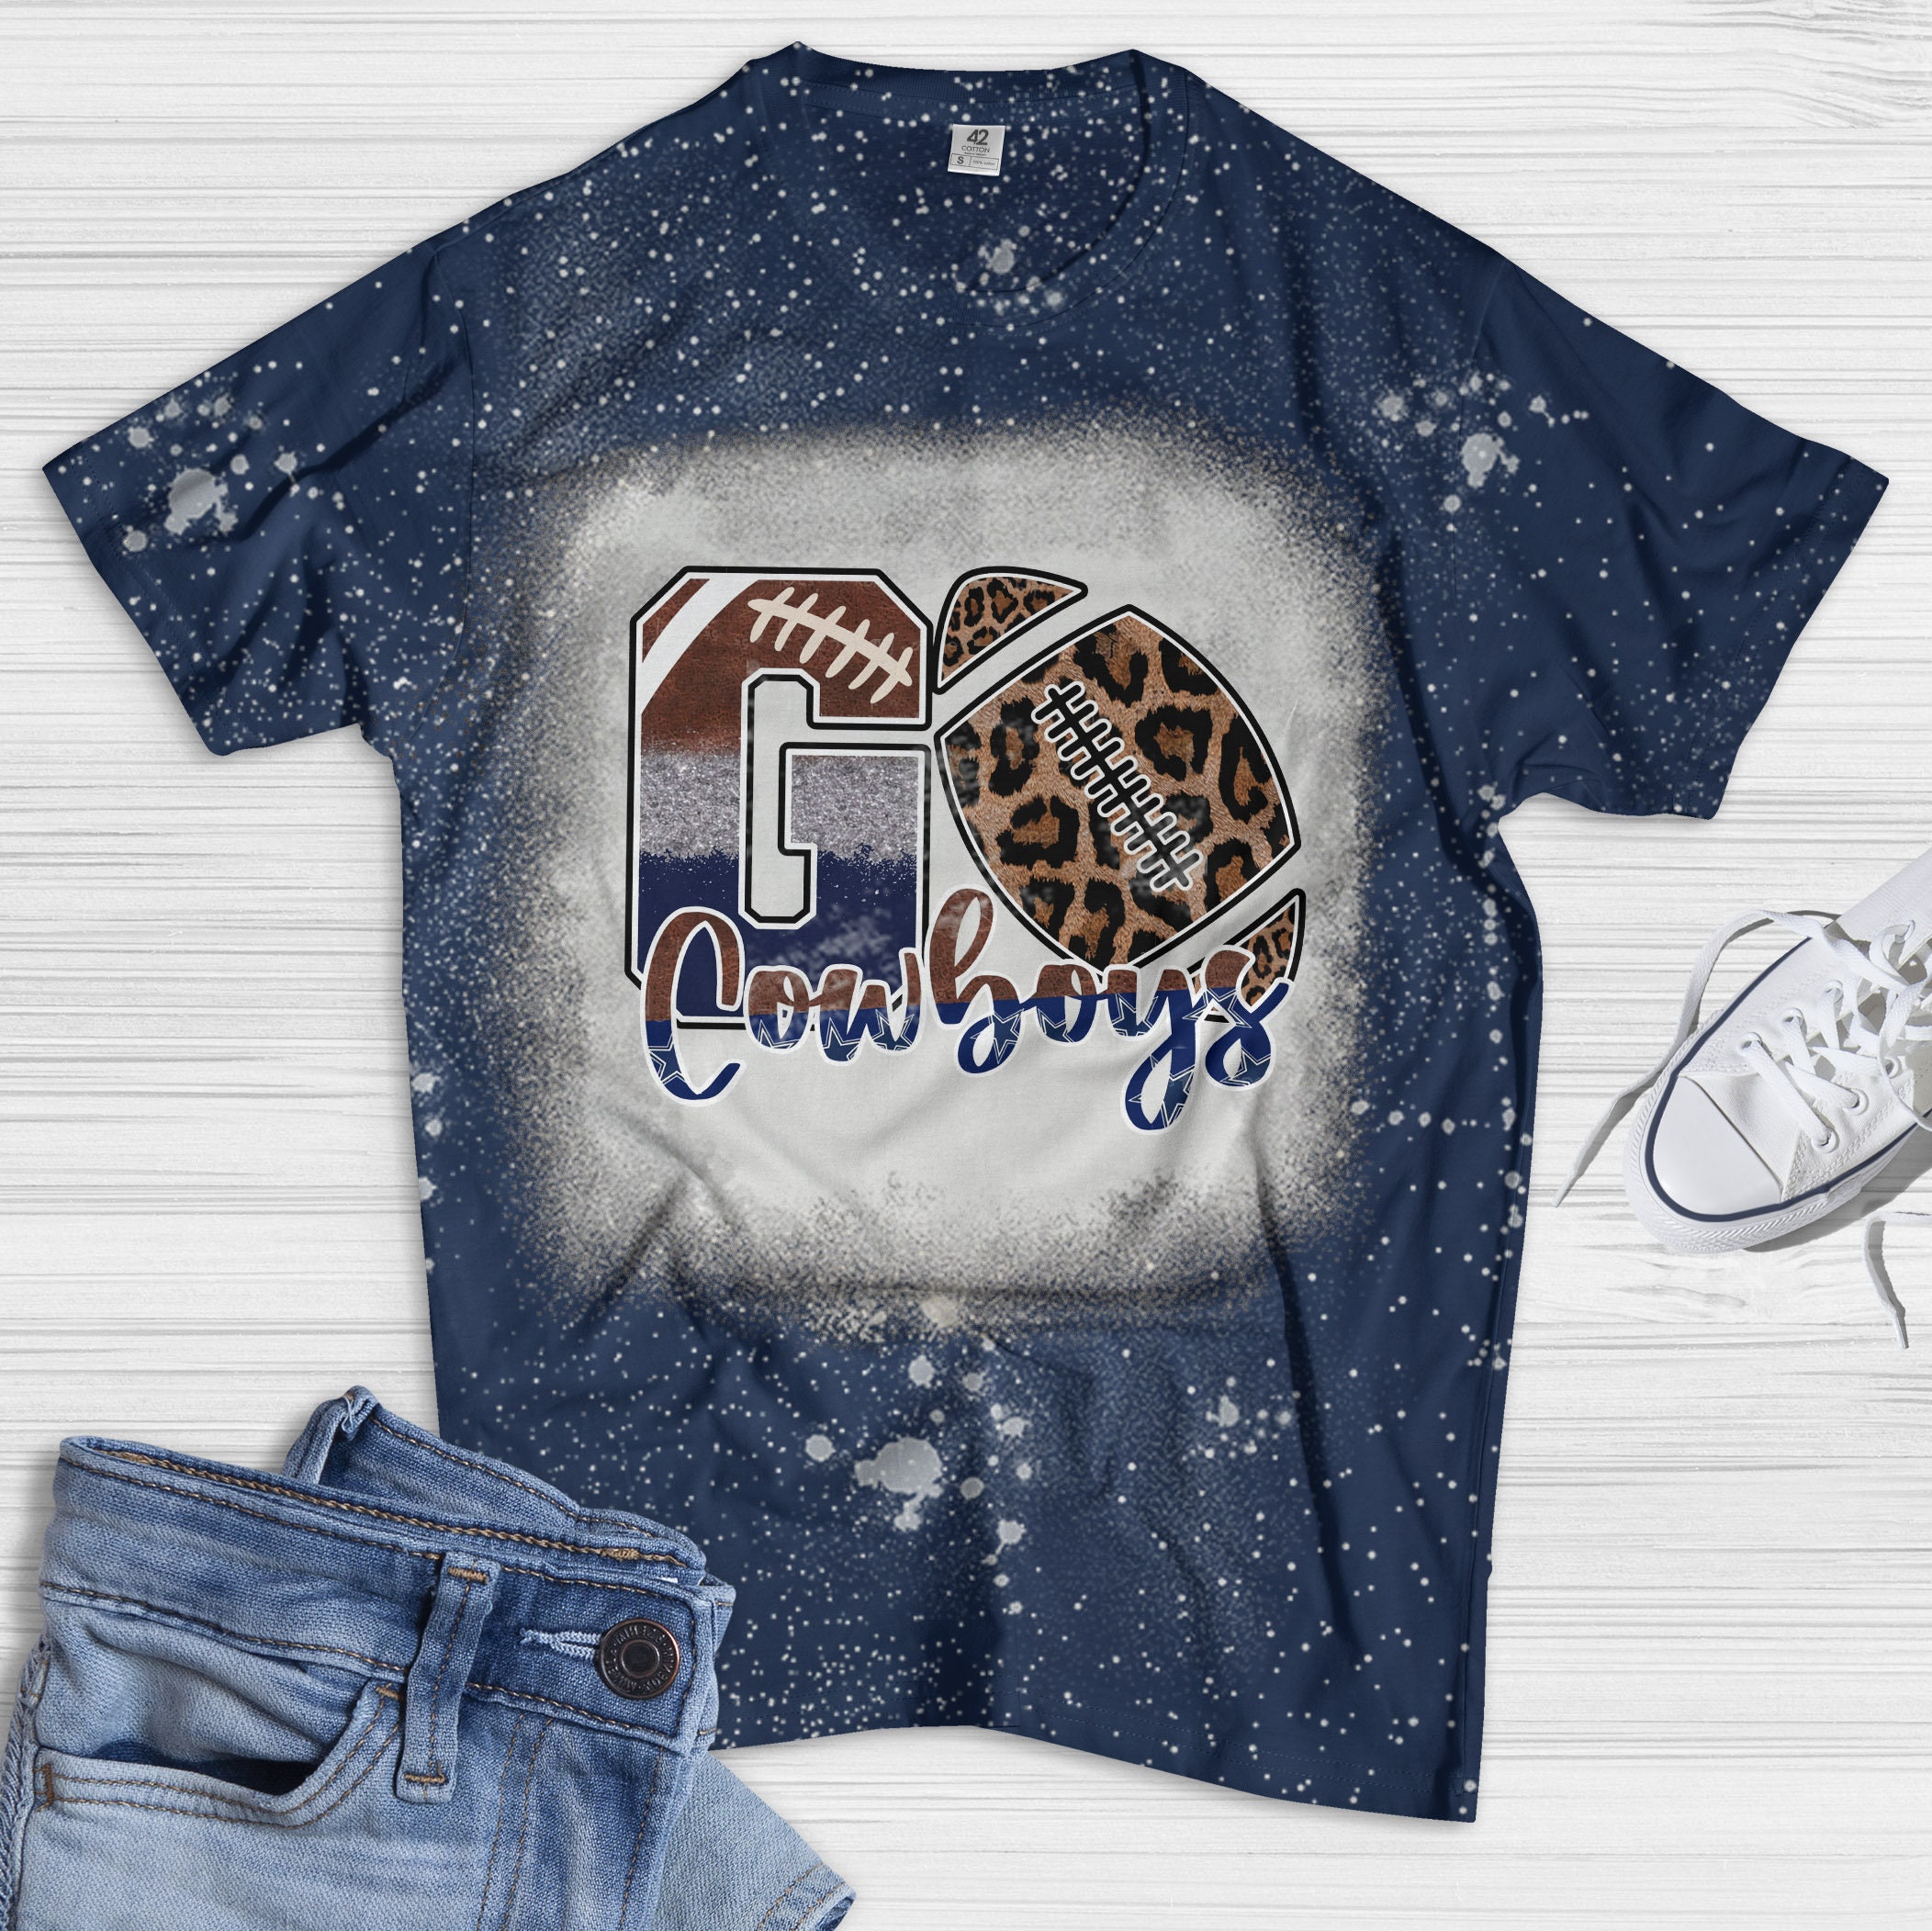 Go Cowboys Shirt Dalas Cowboys Leopard players Dalas Cowboys Shirt handmade cotton distressed shirt,cotton bleached shirt